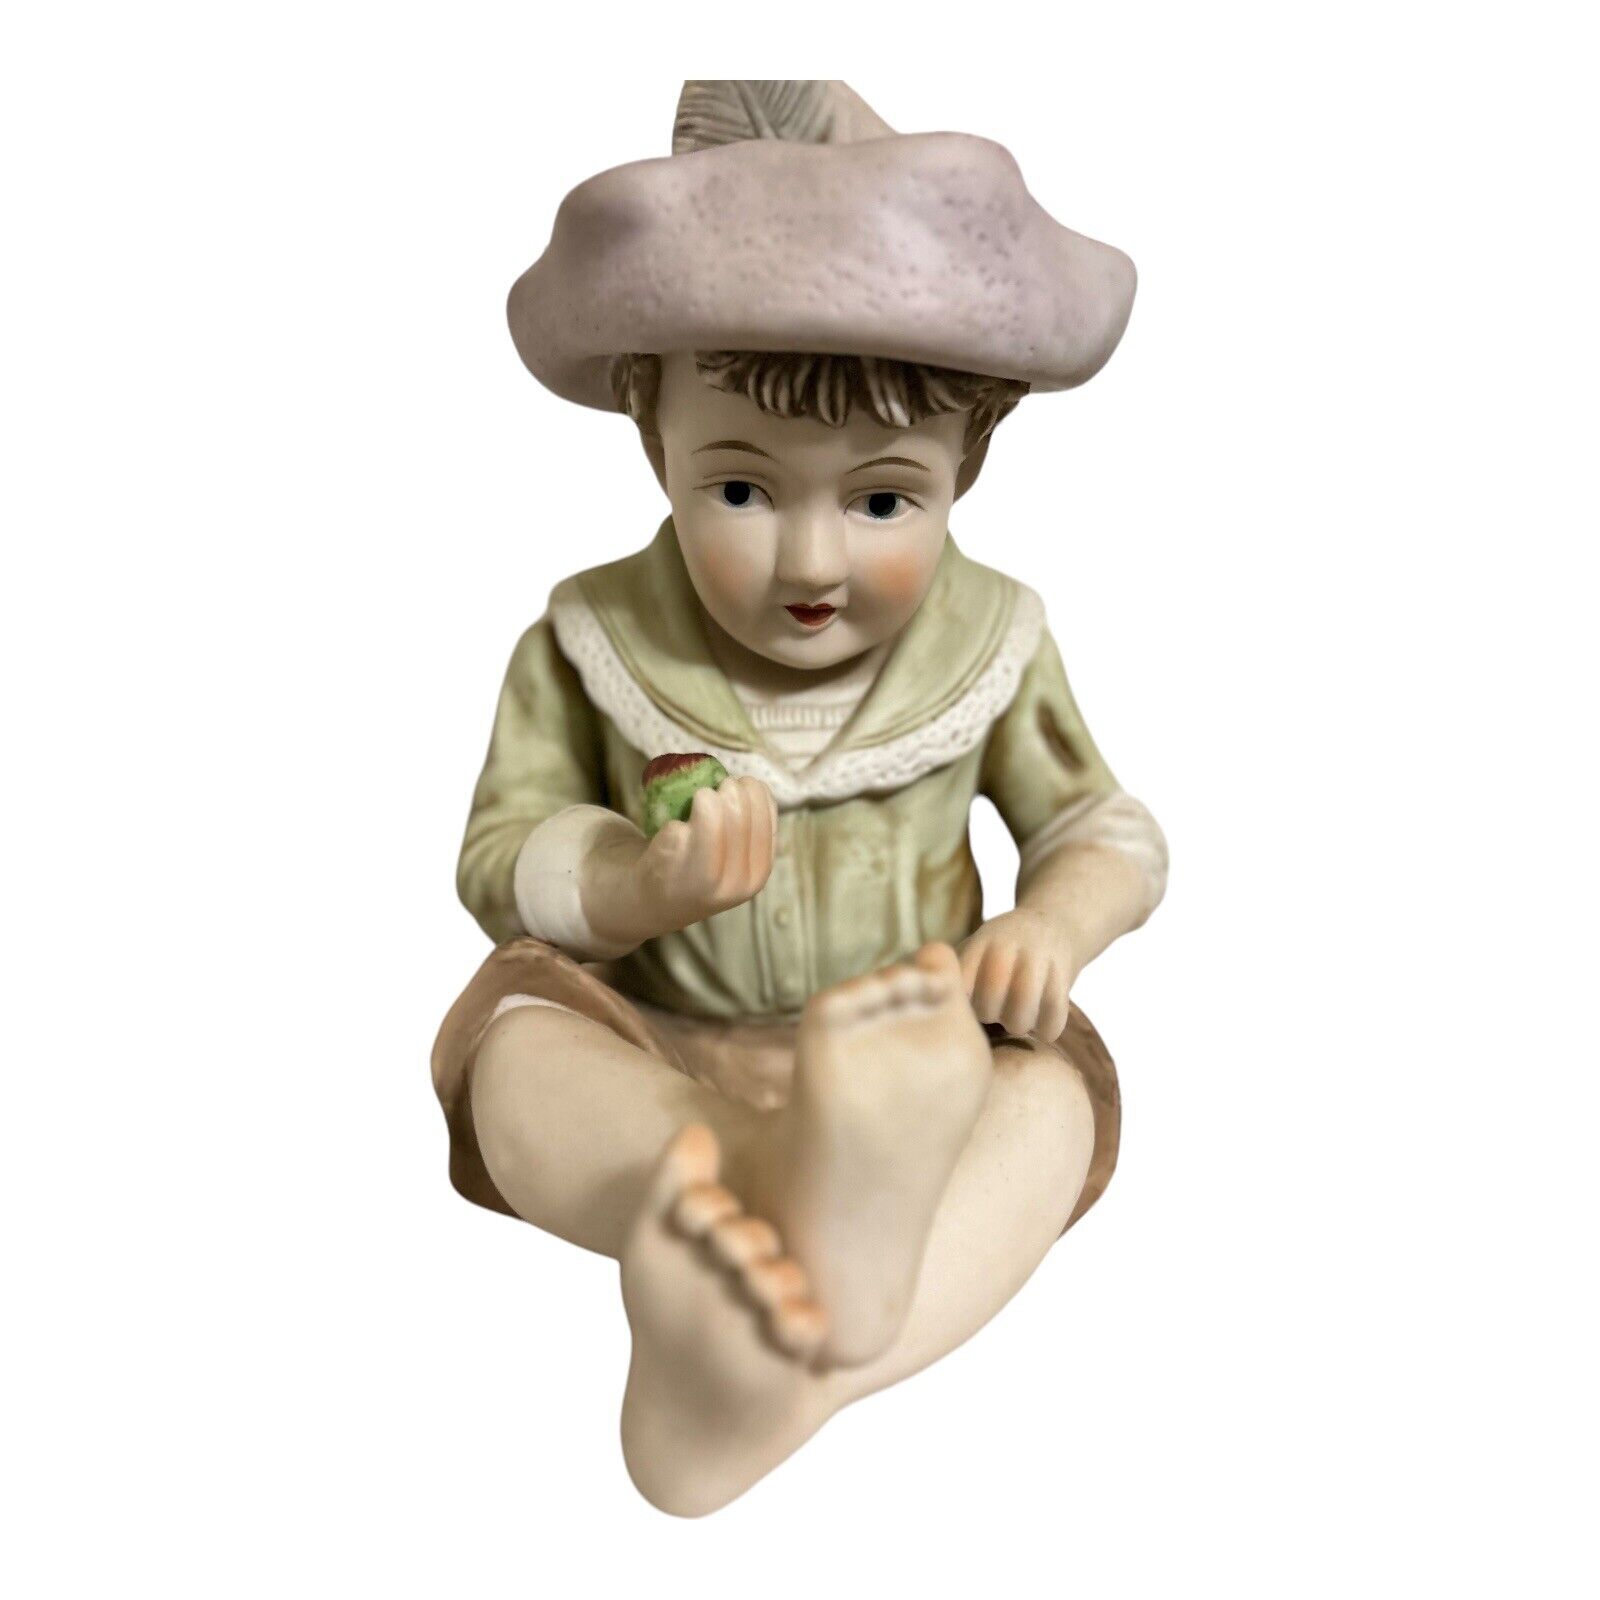 Vintage RARE Antique Germany Bisque Porcelain Baby Toddler Figurine 12 1/4\'\'